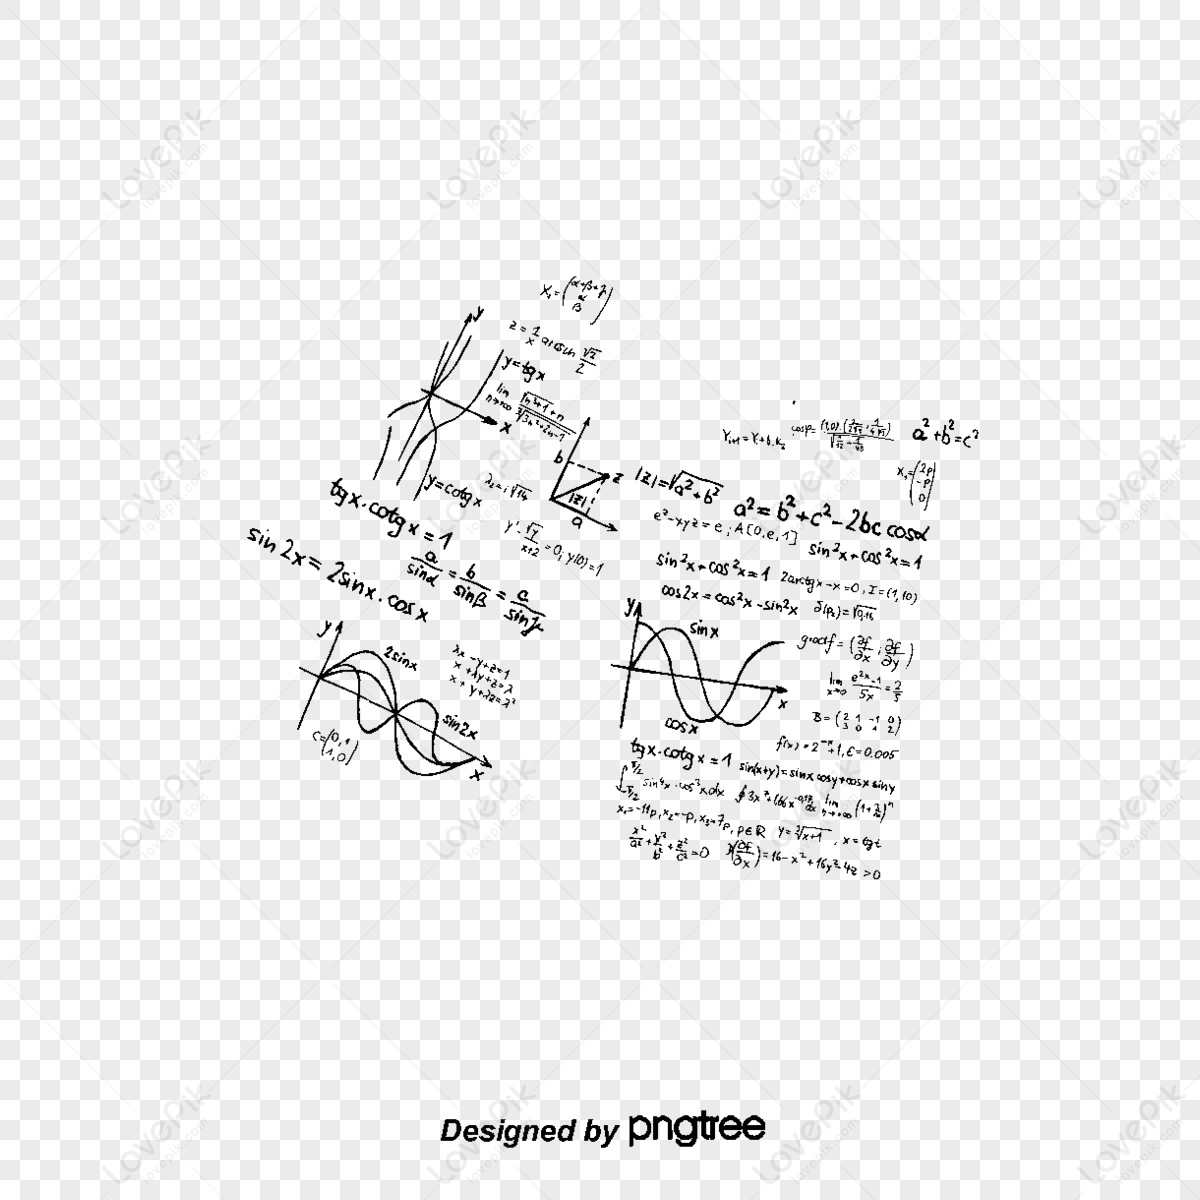 handwritten mathematical problem solving equations,mathematical sketch,formula,handwritten math formula png image